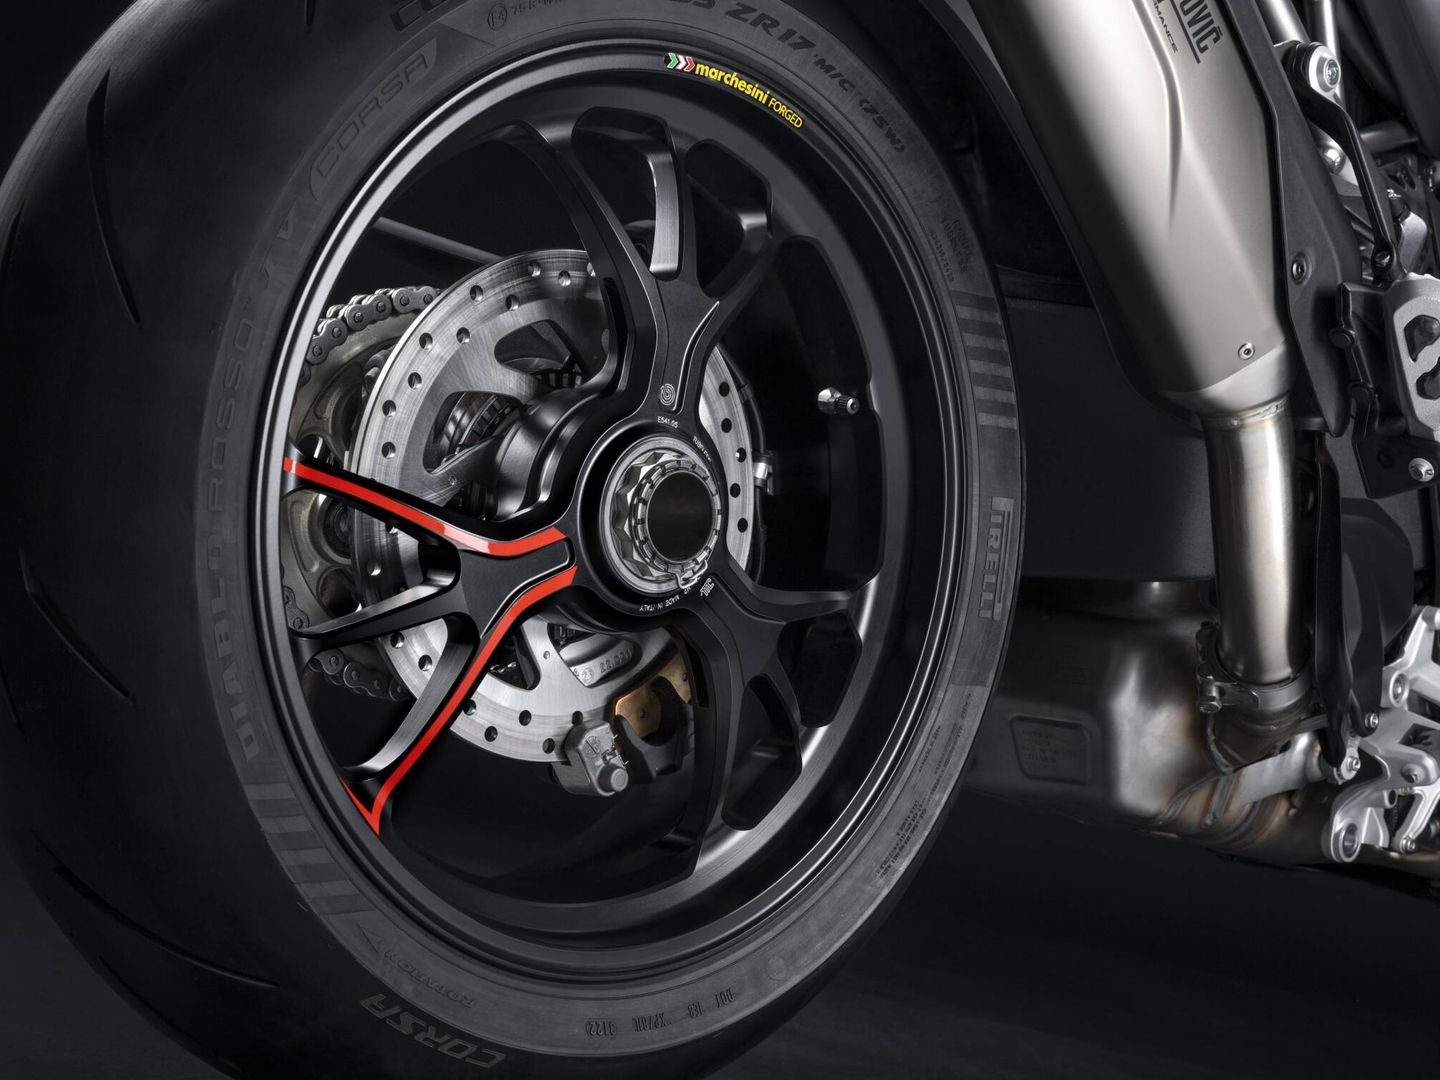 Las llantas Marchesini de aluminio forjado de la Ducati ahorran 2,7 kilos.